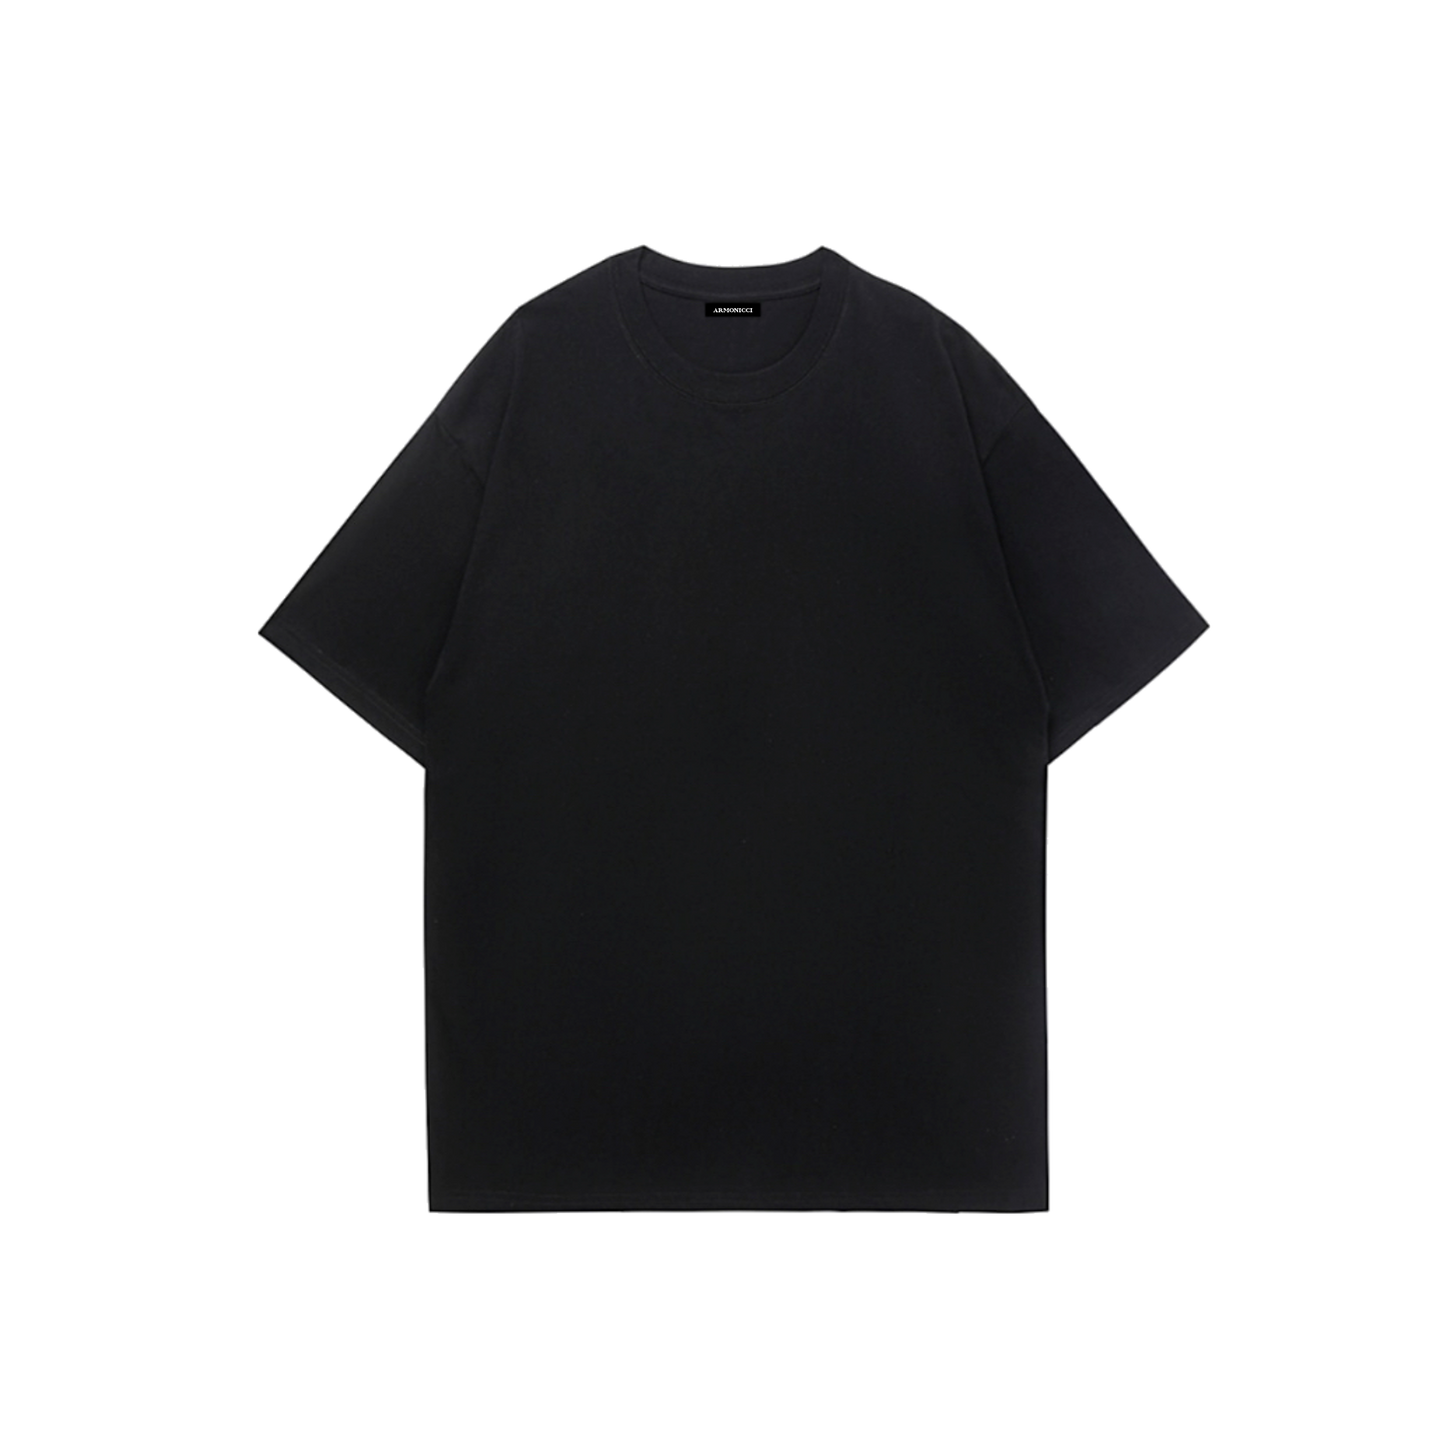 Heavyweight Oversized Premium Minimal Black T-Shirt